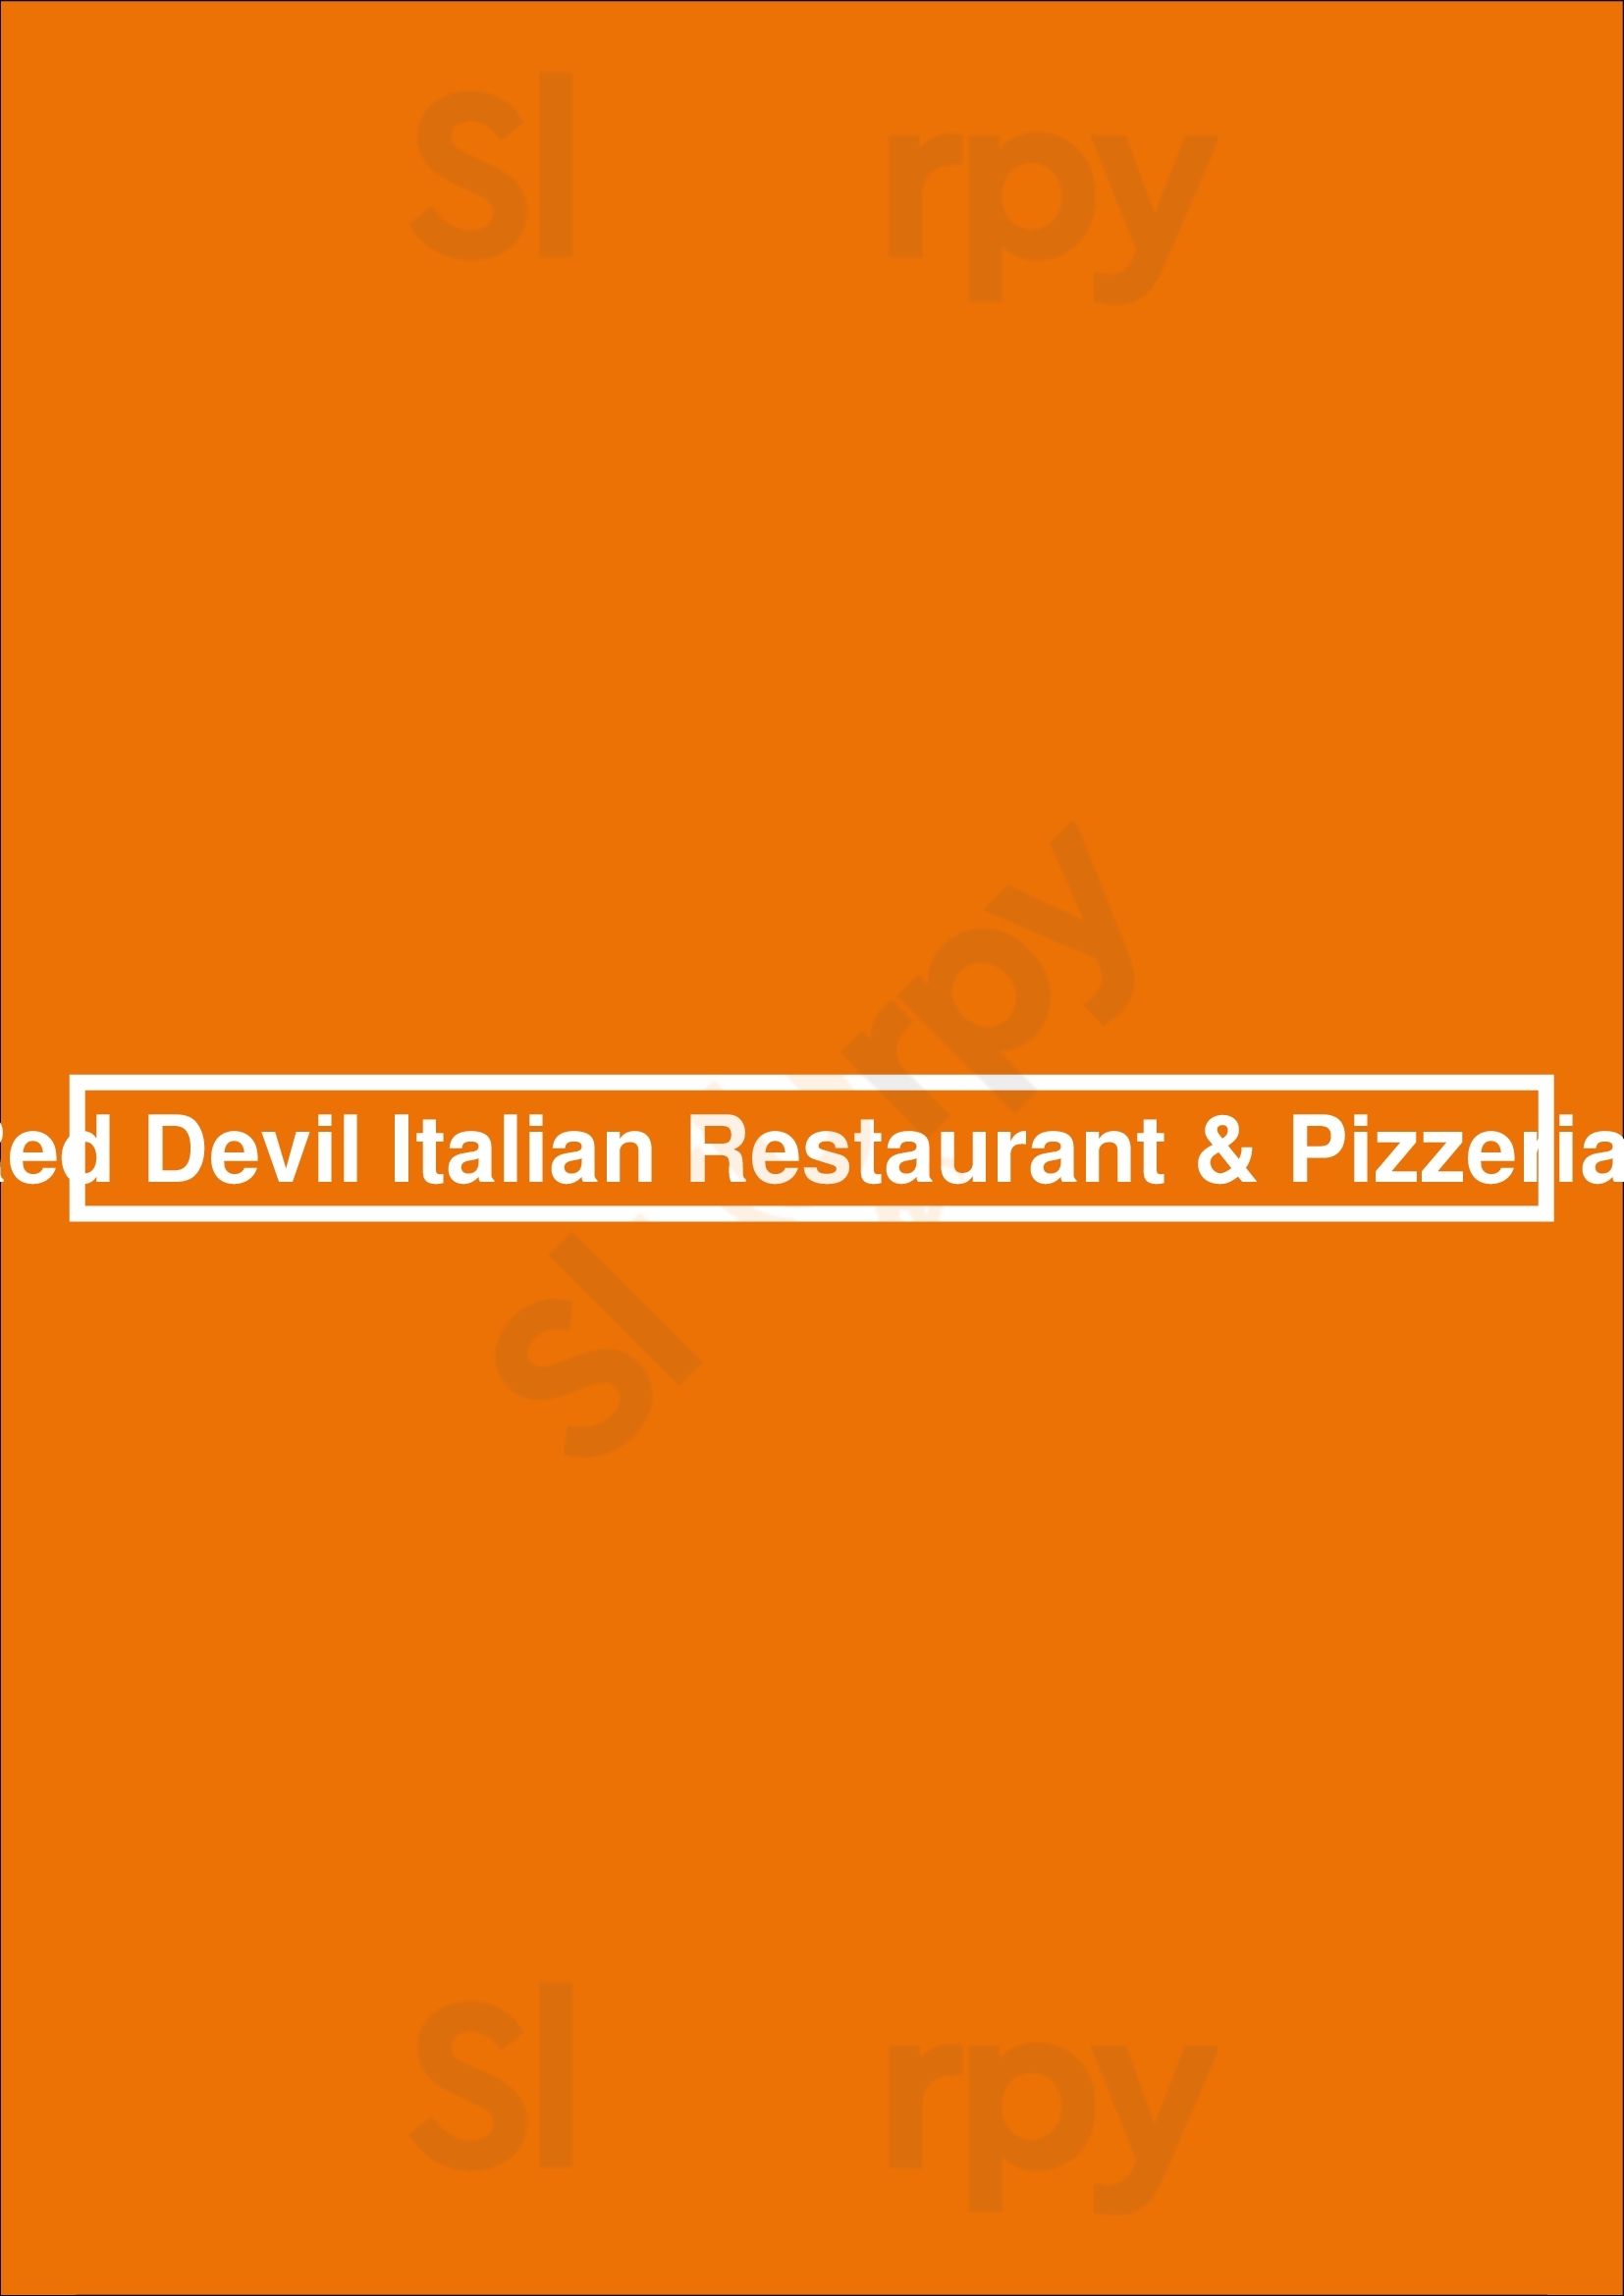 Red Devil Italian Restaurant & Pizzerias Phoenix Menu - 1